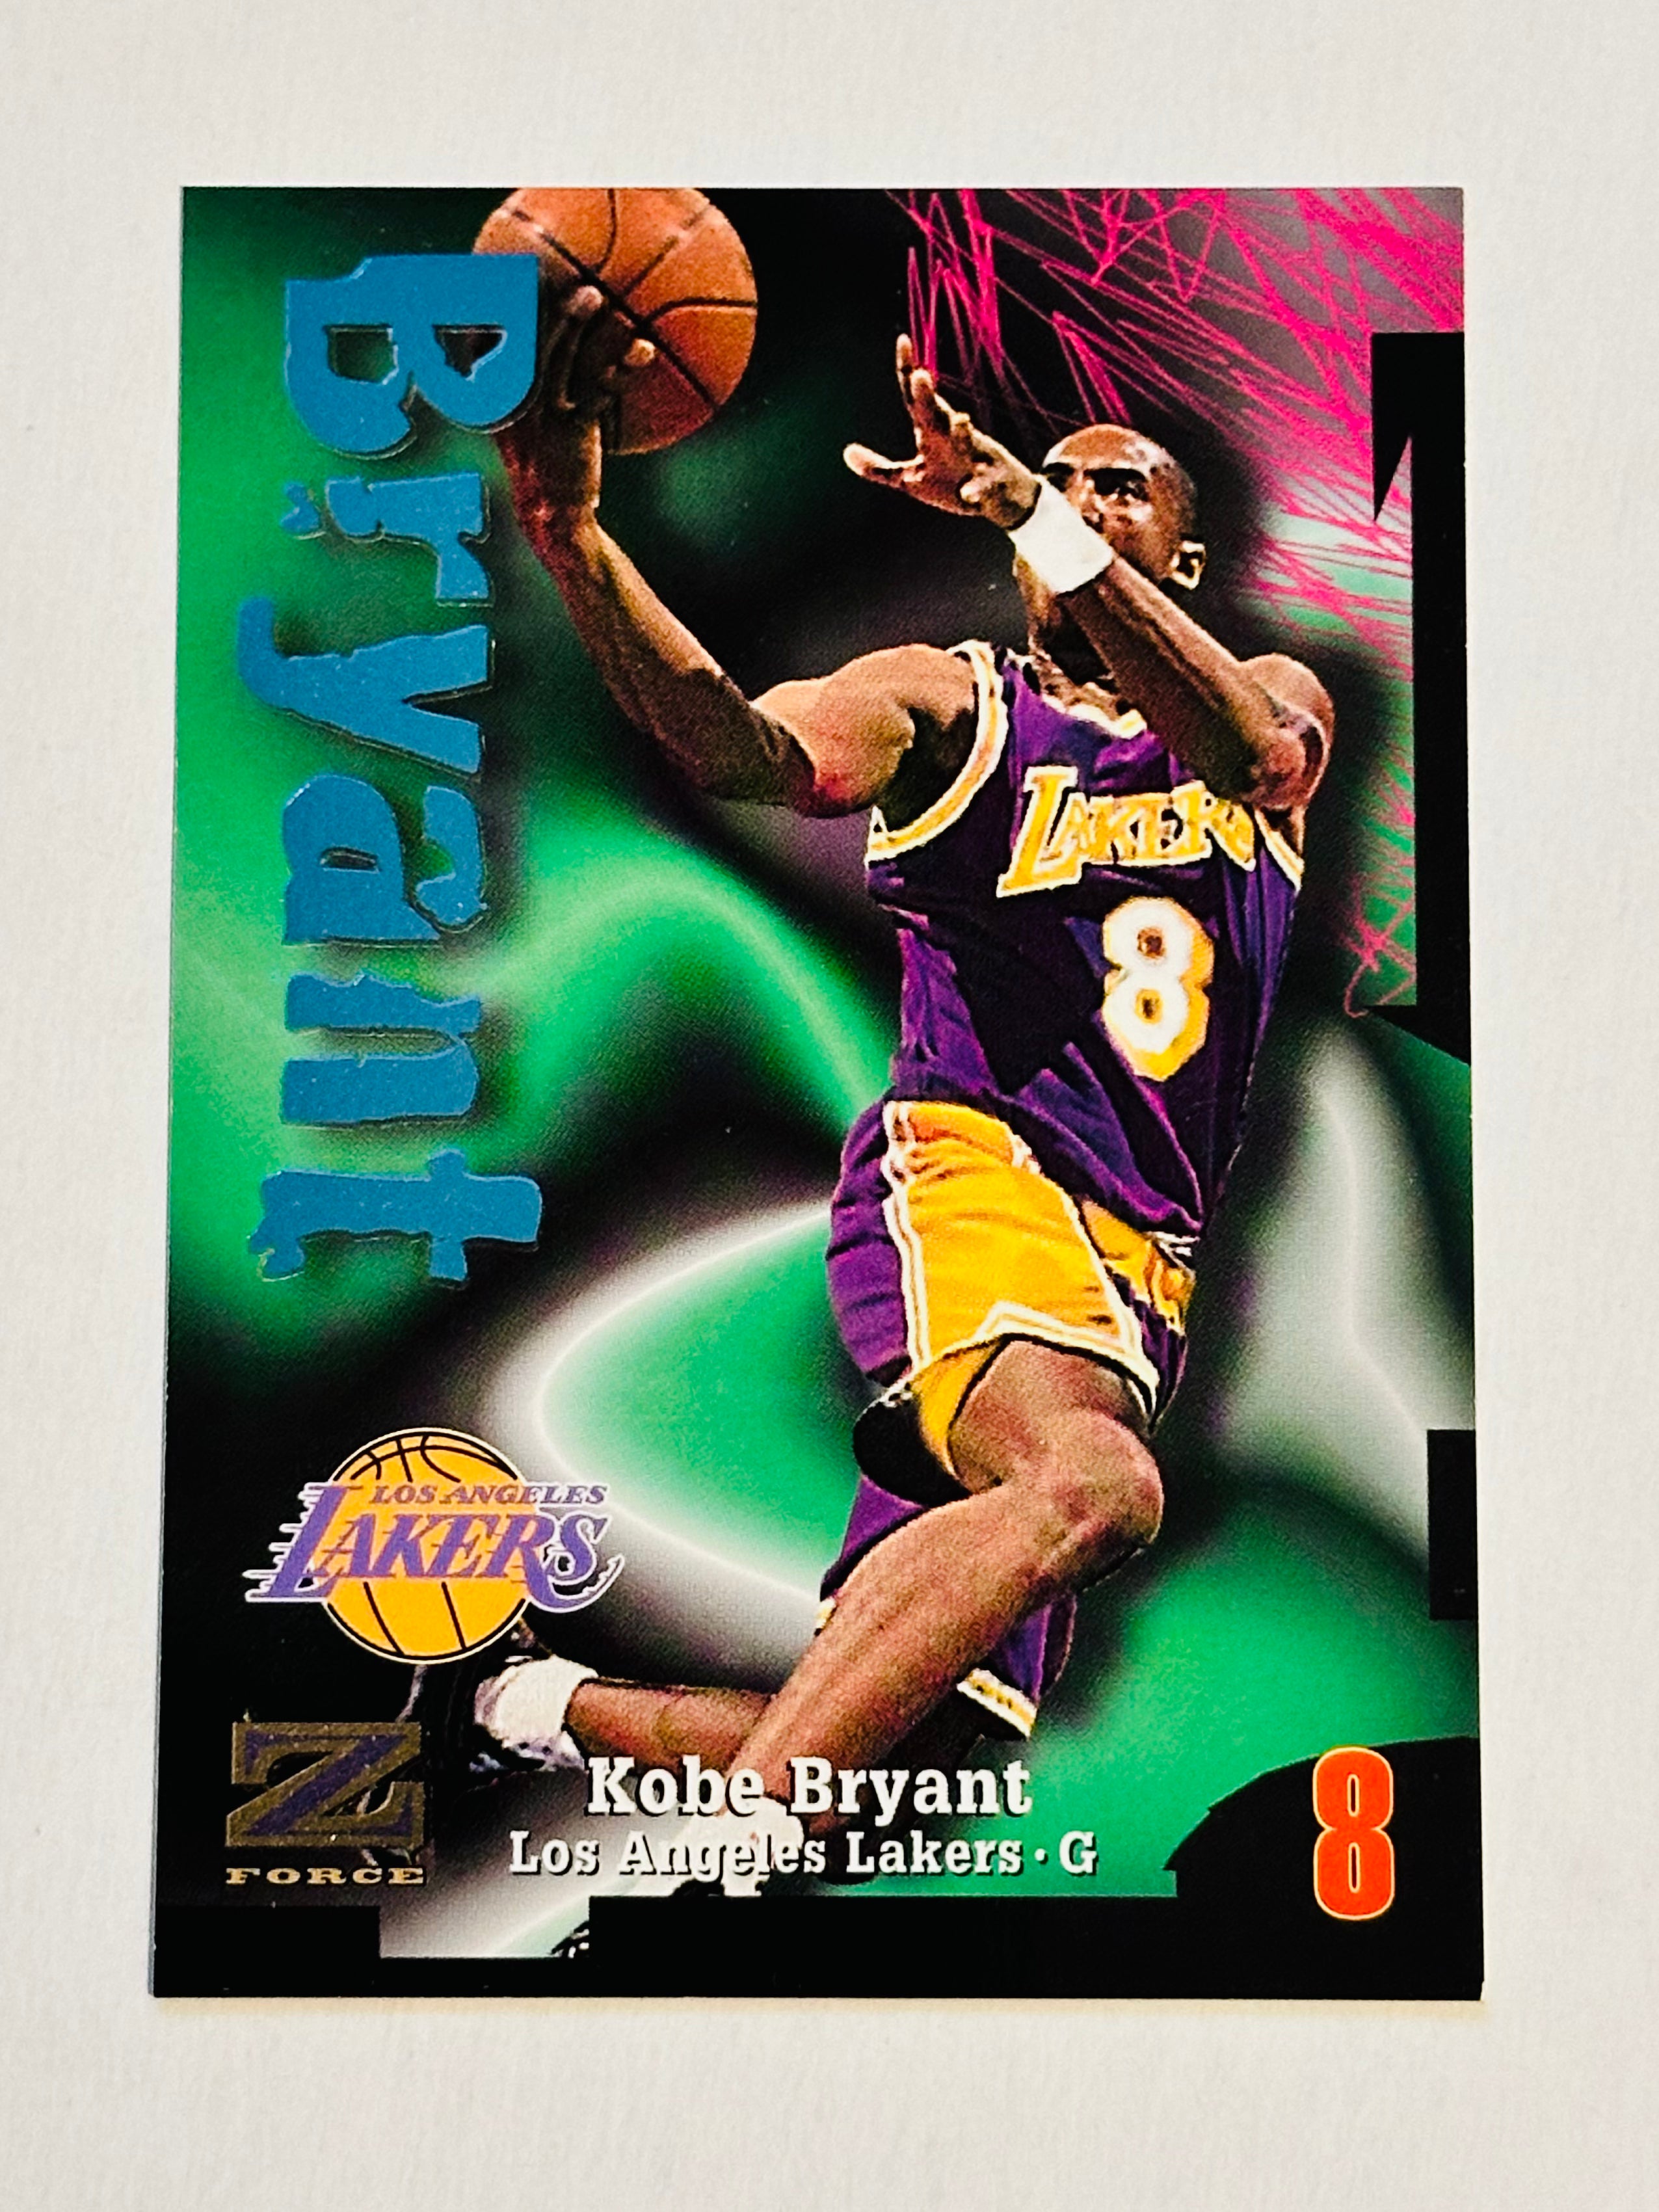 Kobe Bryant 2nd year Z force high grade basketball card 1997